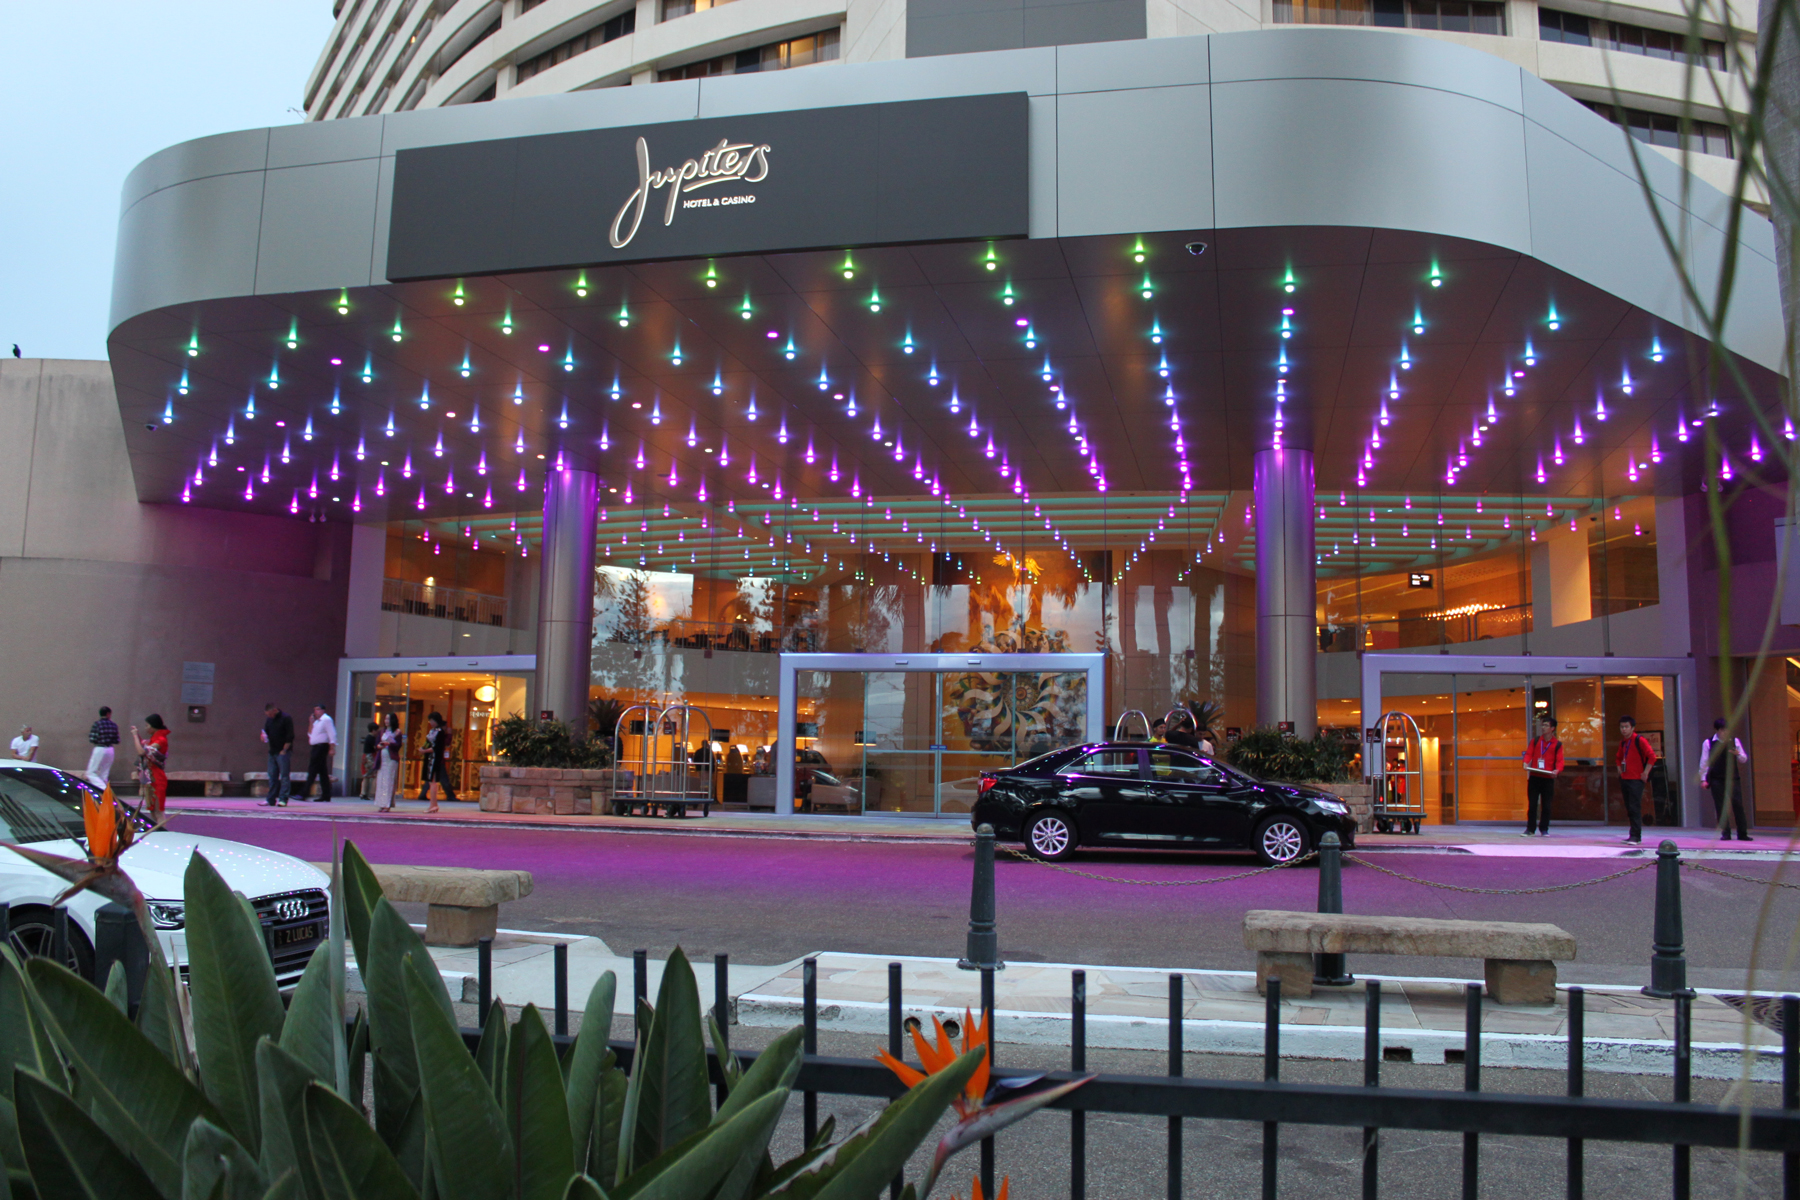 The Star Gold Coast Jupiters Casino Entrance Outdoor LED Lights